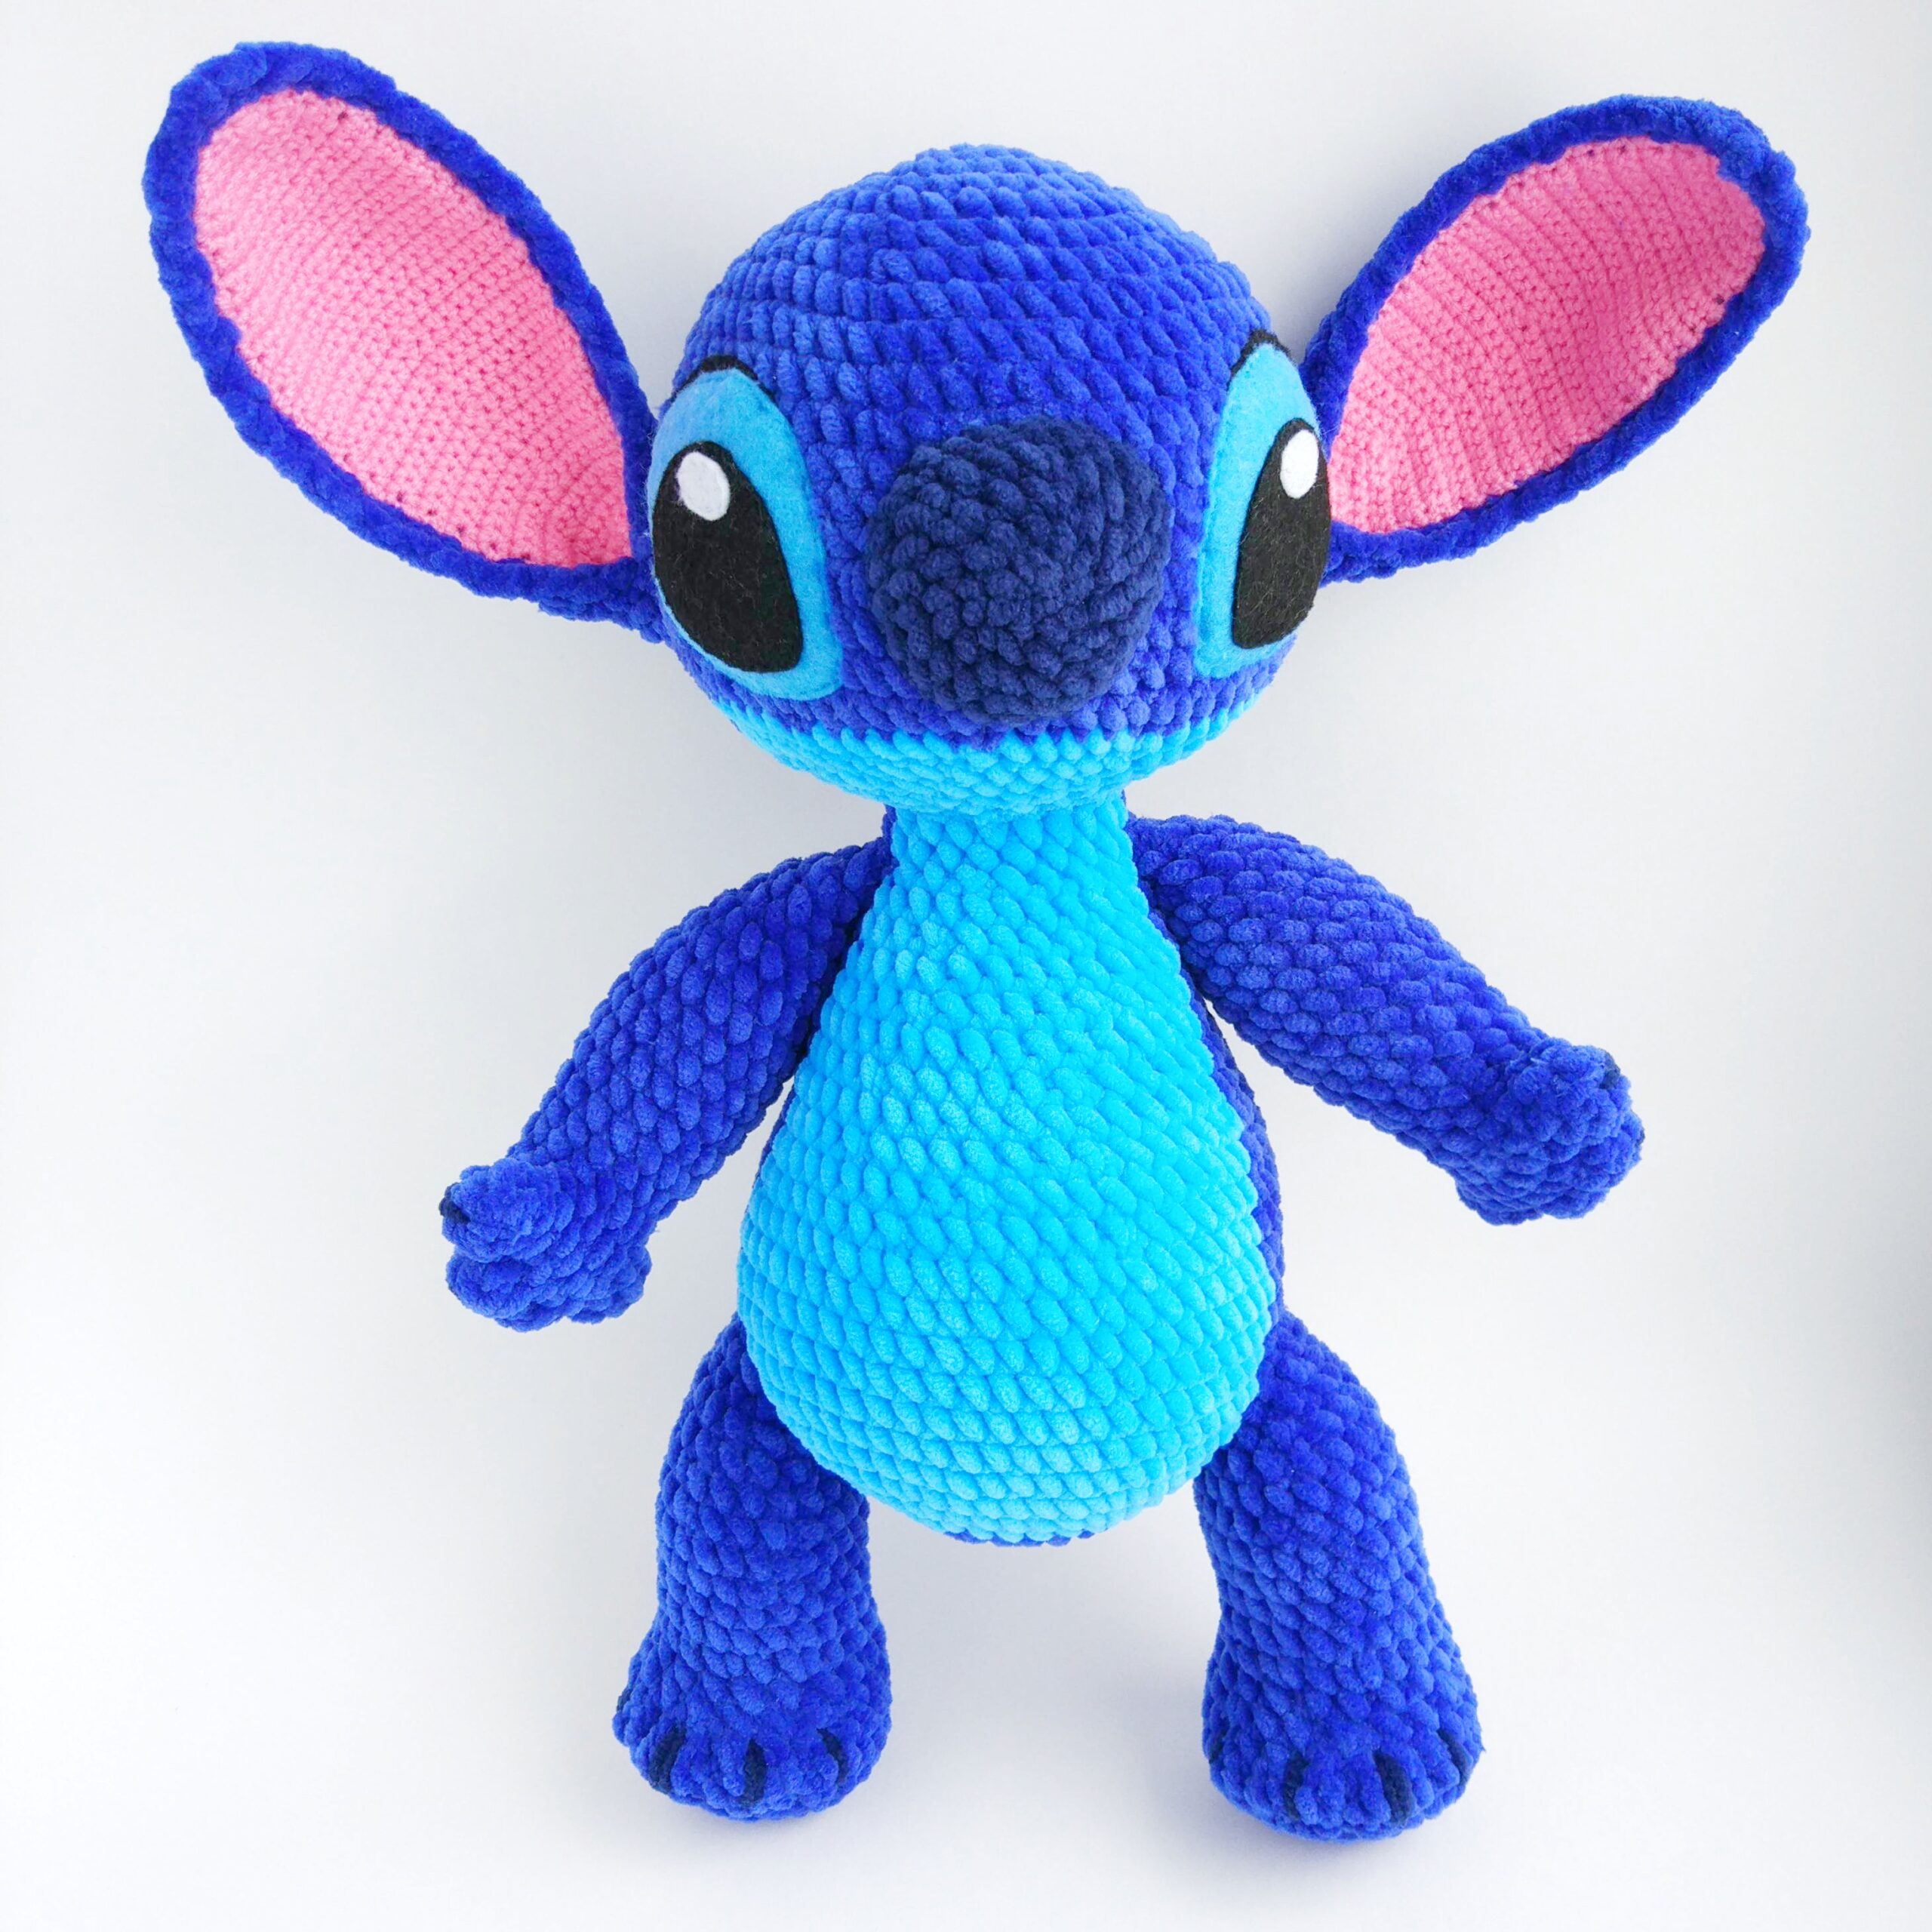 Crochet Stitch toy - amigurumi Stitch pattern part 4 - Lilo a